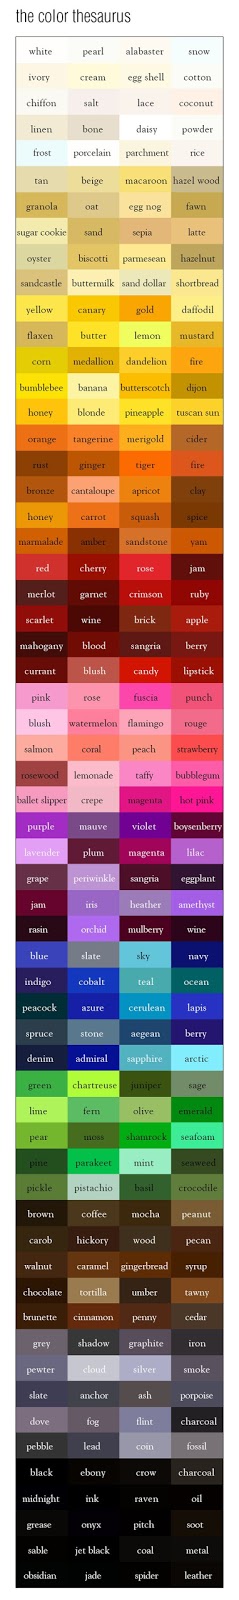 CPI Tino Grandío Bilingual Sections: The color thesaurus